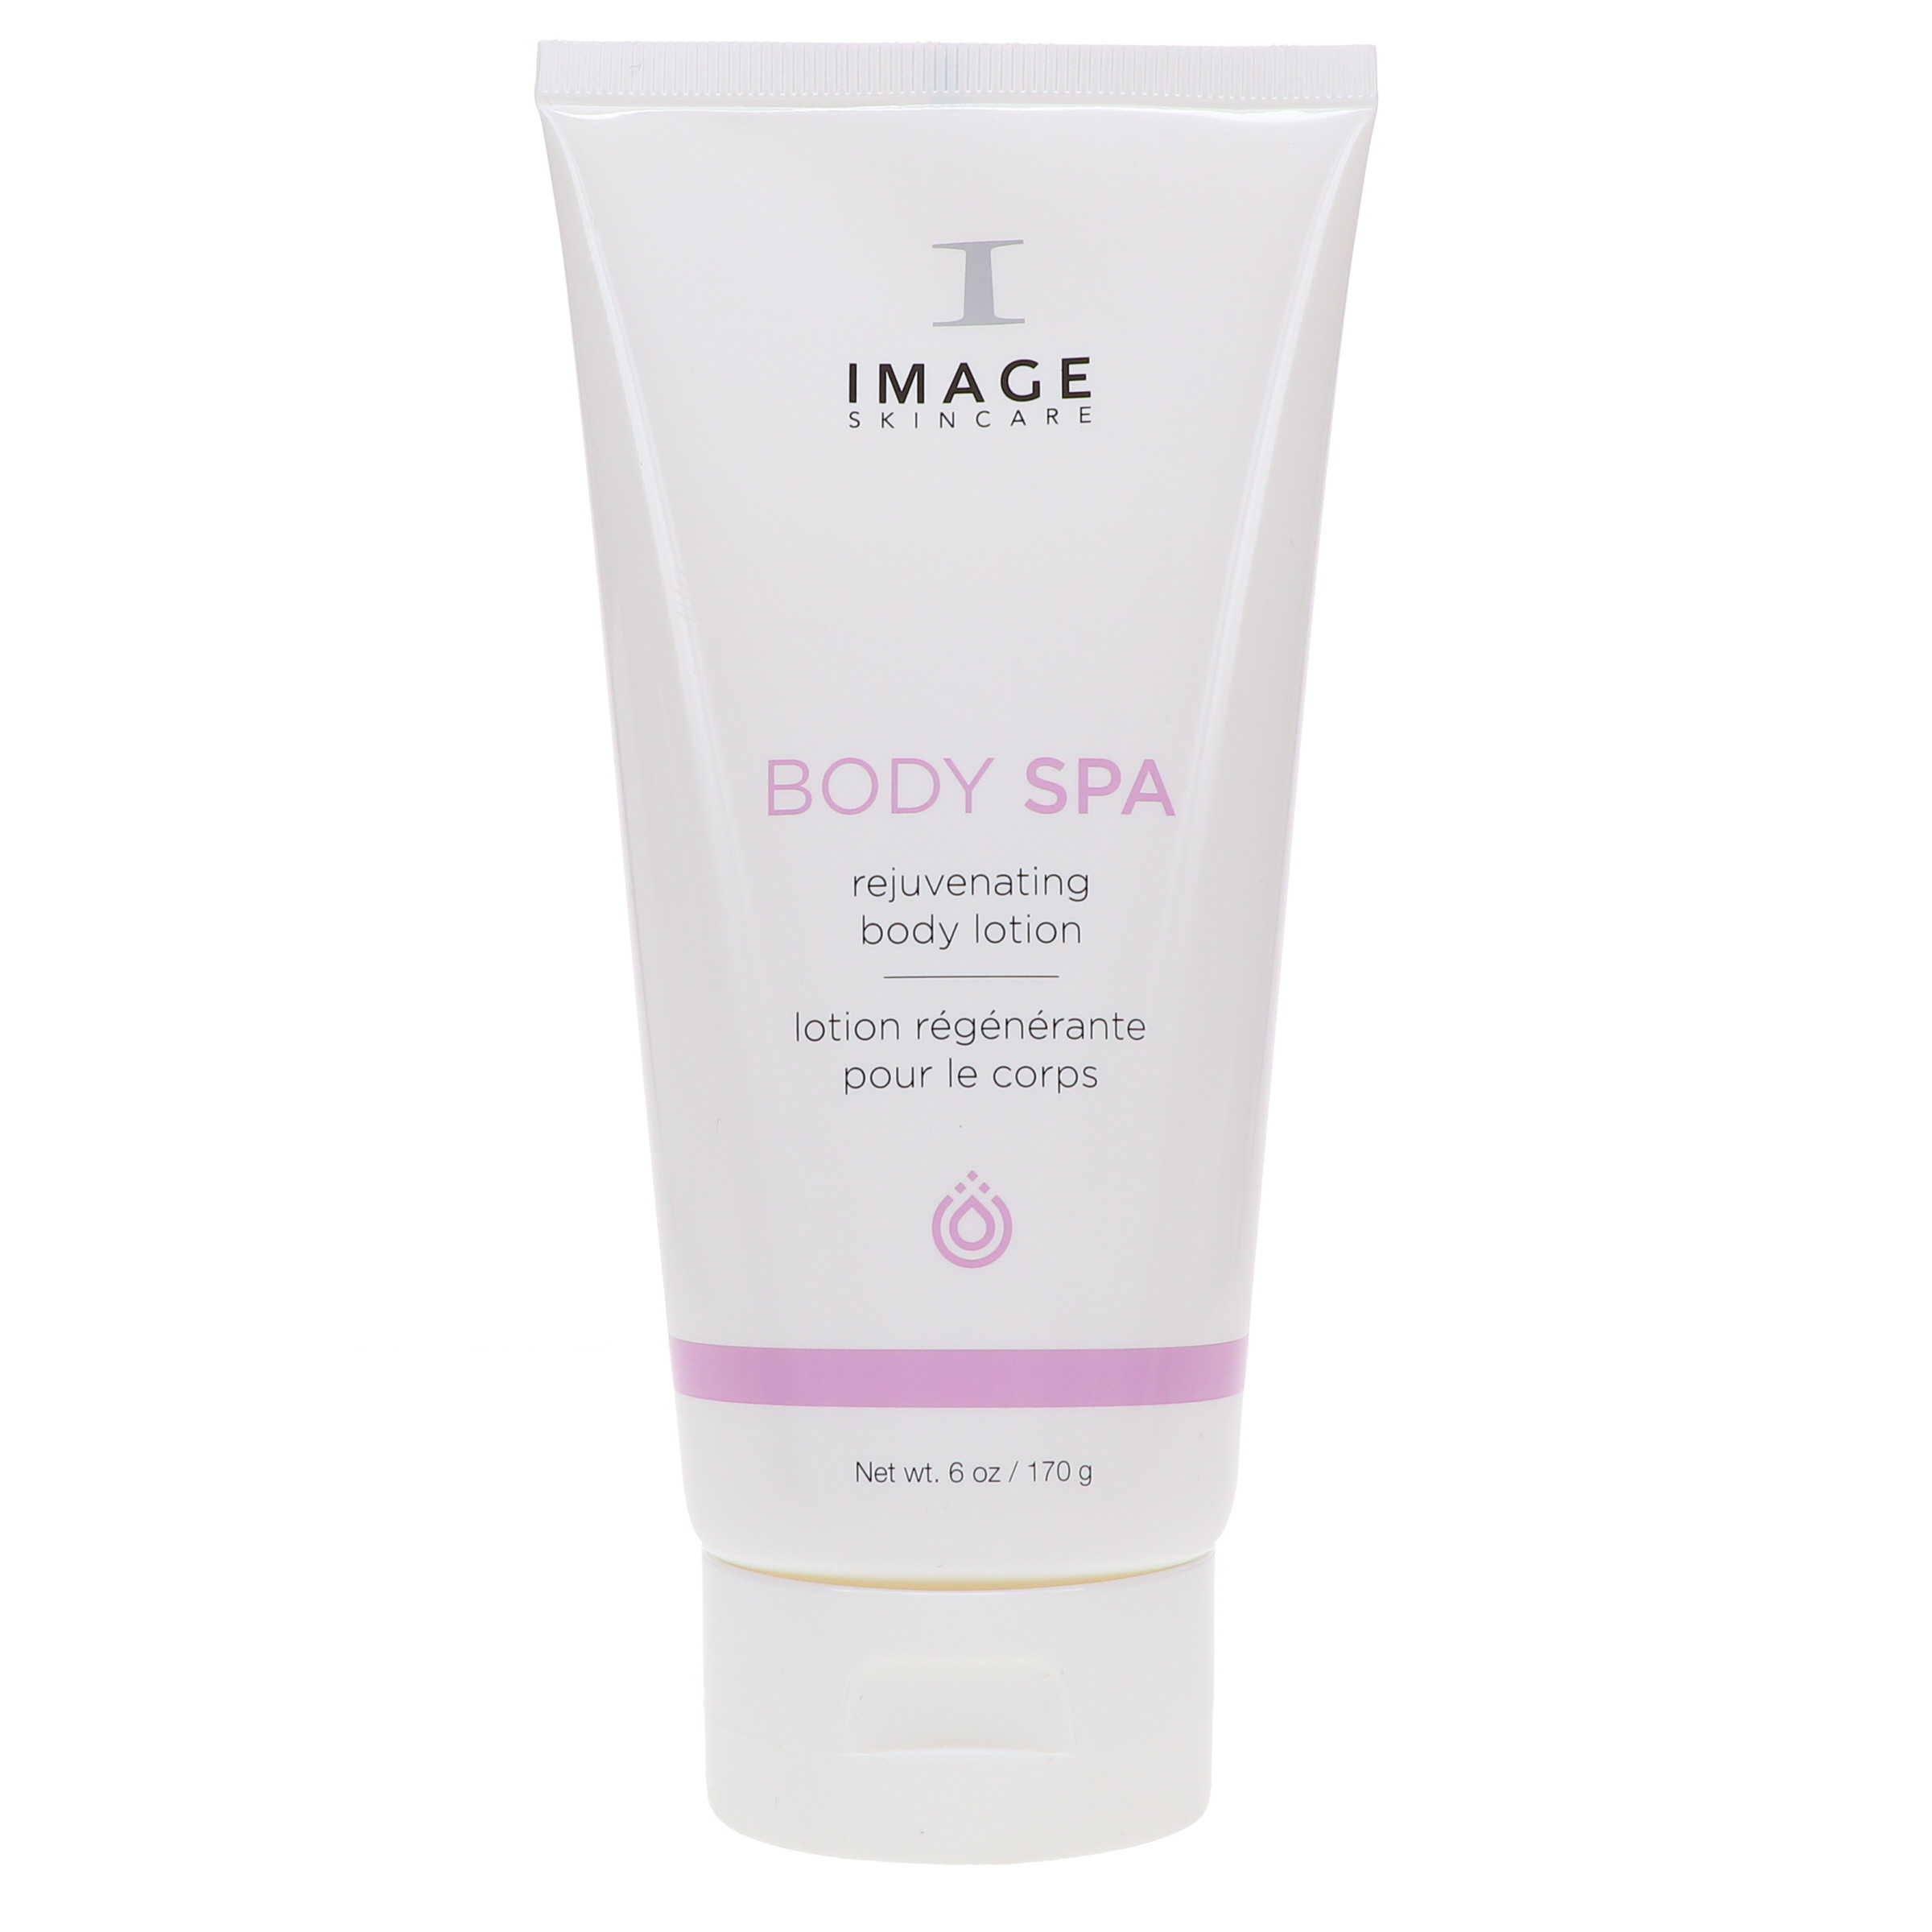 IMAGE Skincare BODY SPA Rejuvenating Body Lotion 6 oz - image 1 of 8